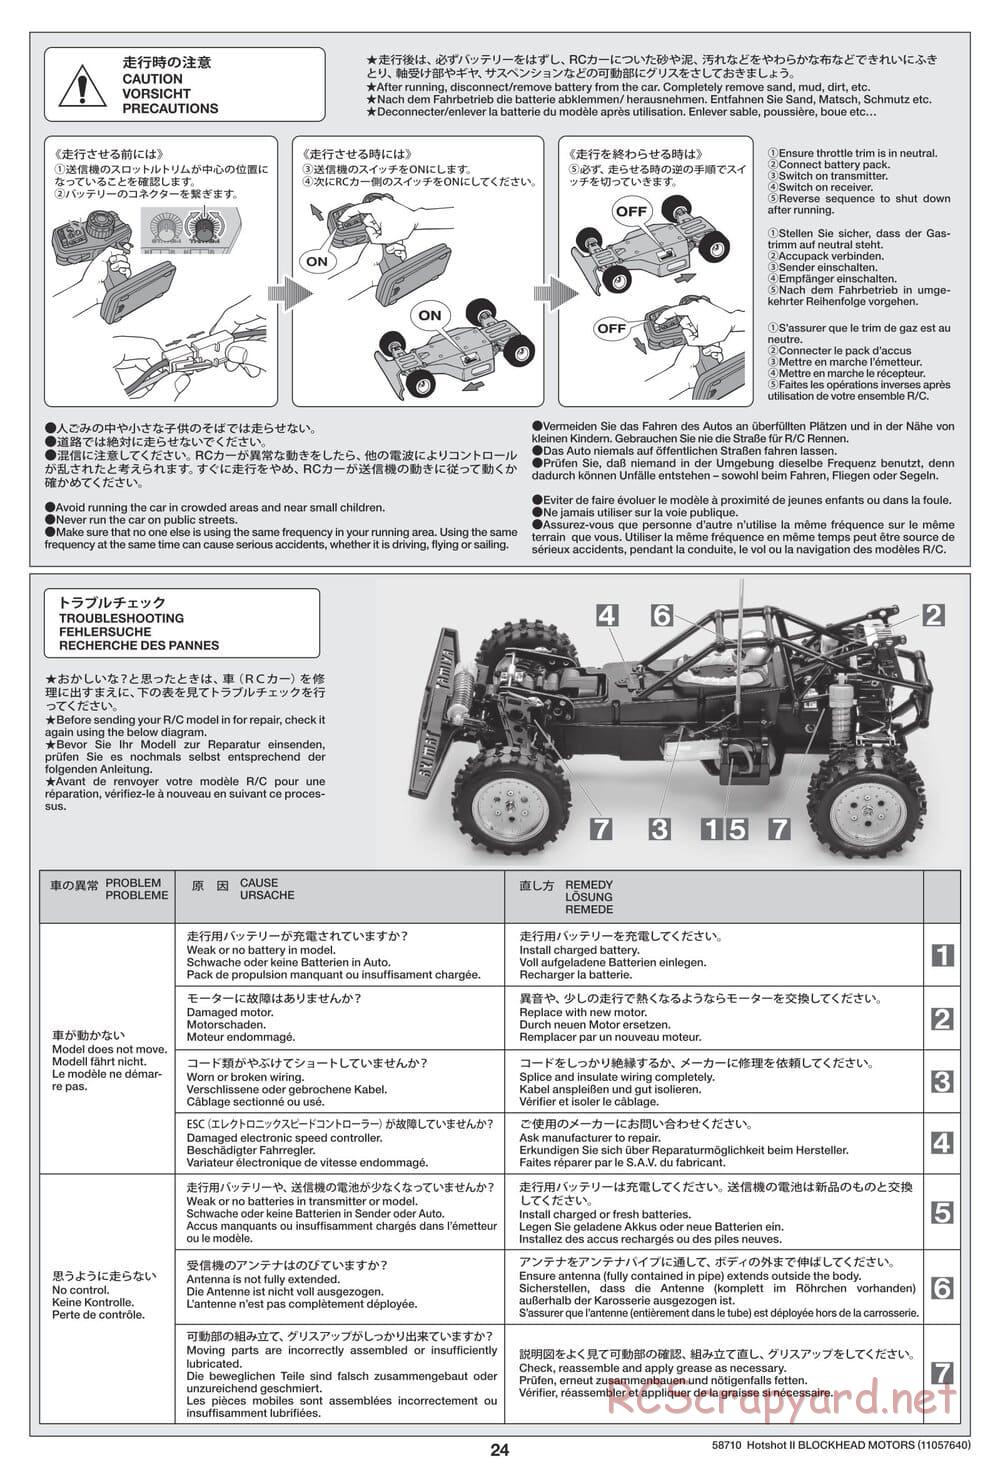 Tamiya - Hotshot II Blockhead Motors - HS Chassis - Manual - Page 24